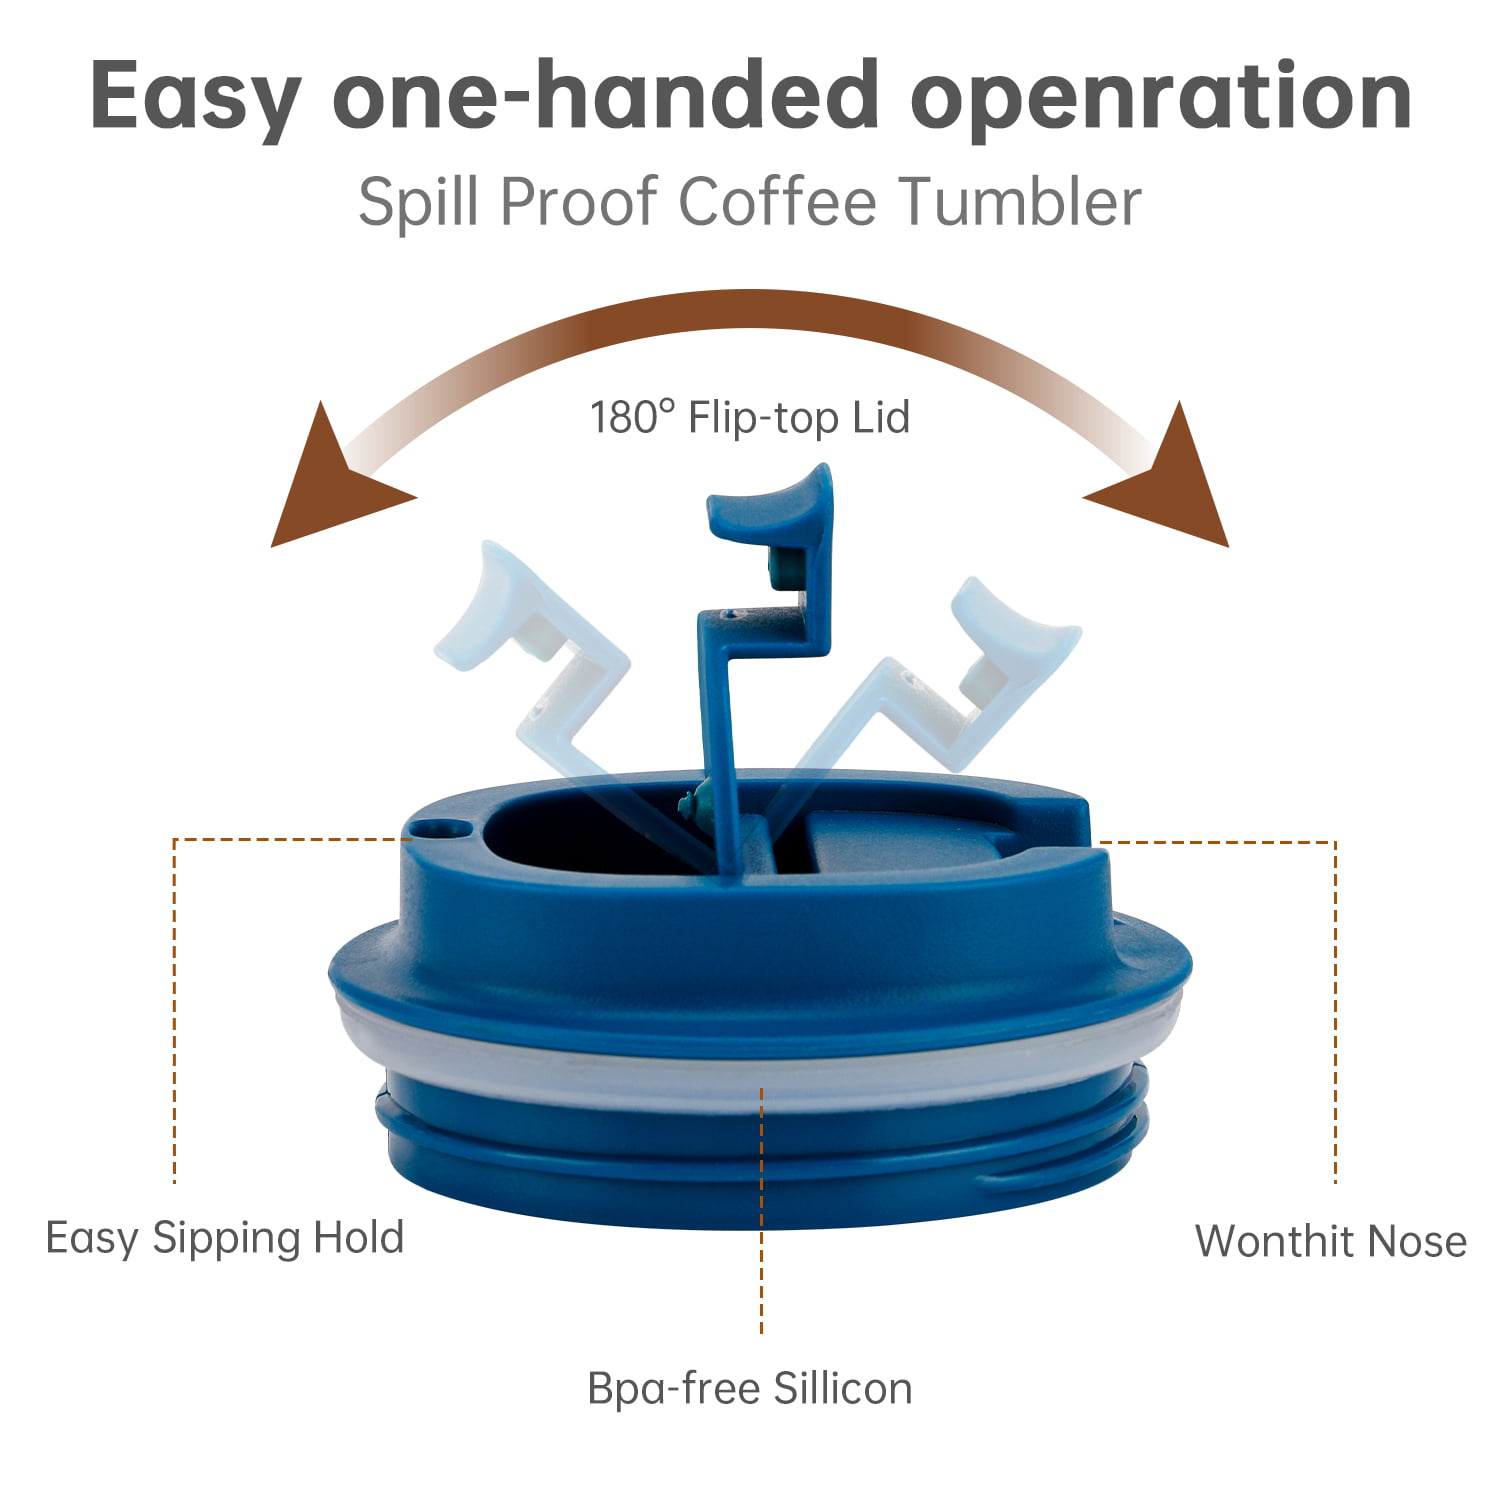 Swig Spill-Proof Reusable Coffee Cup » Gadget Flow